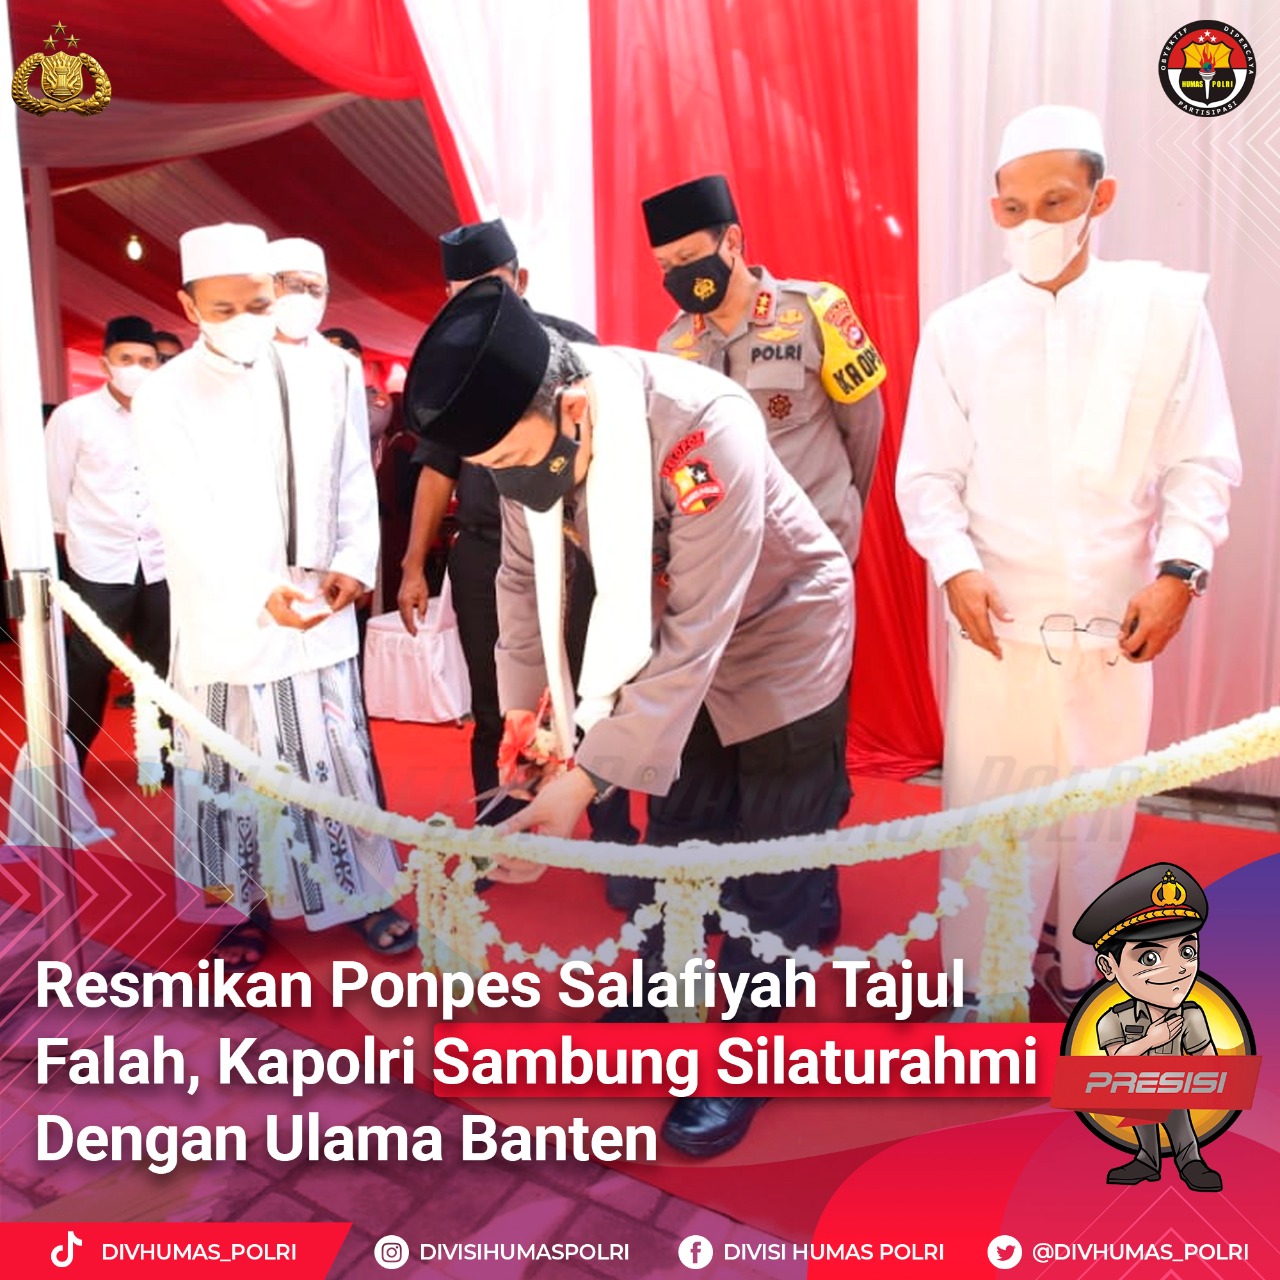 Kapolri Silaturahmi  Ulama Banten, Resmikan Ponpes Salafiyah Tajul Falah